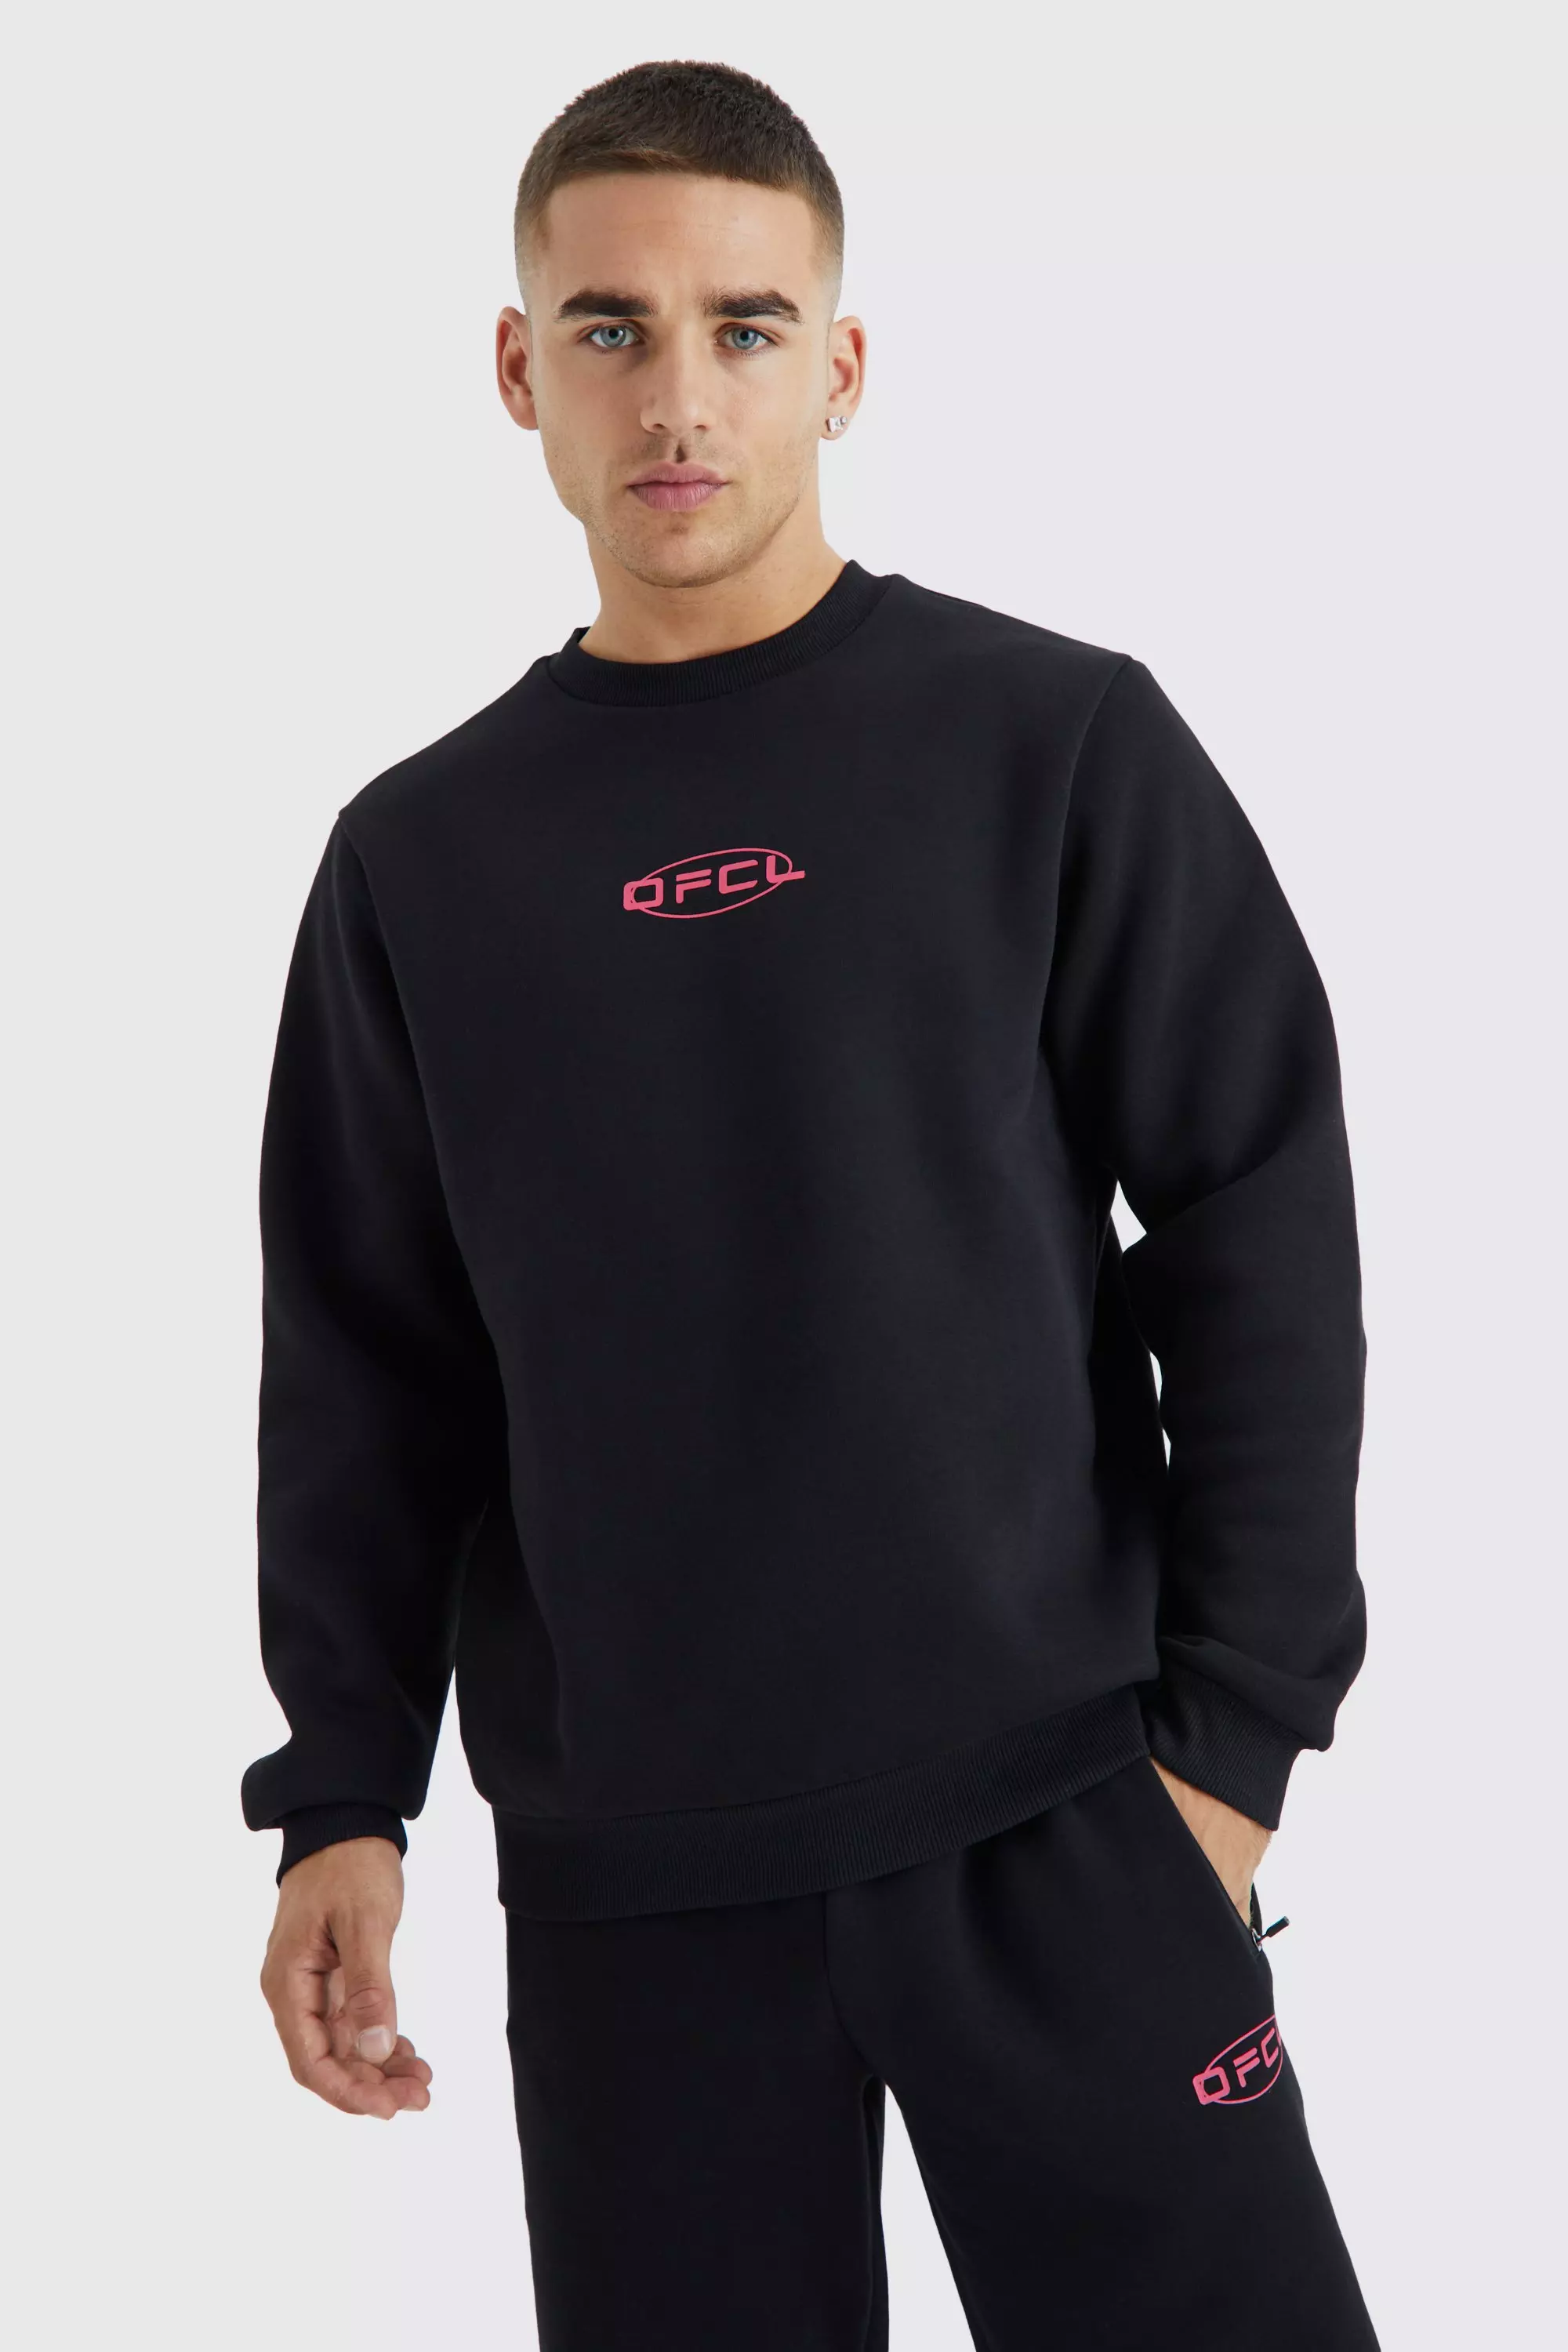 Black Basic Ofcl Crew Neck Sweatshirt